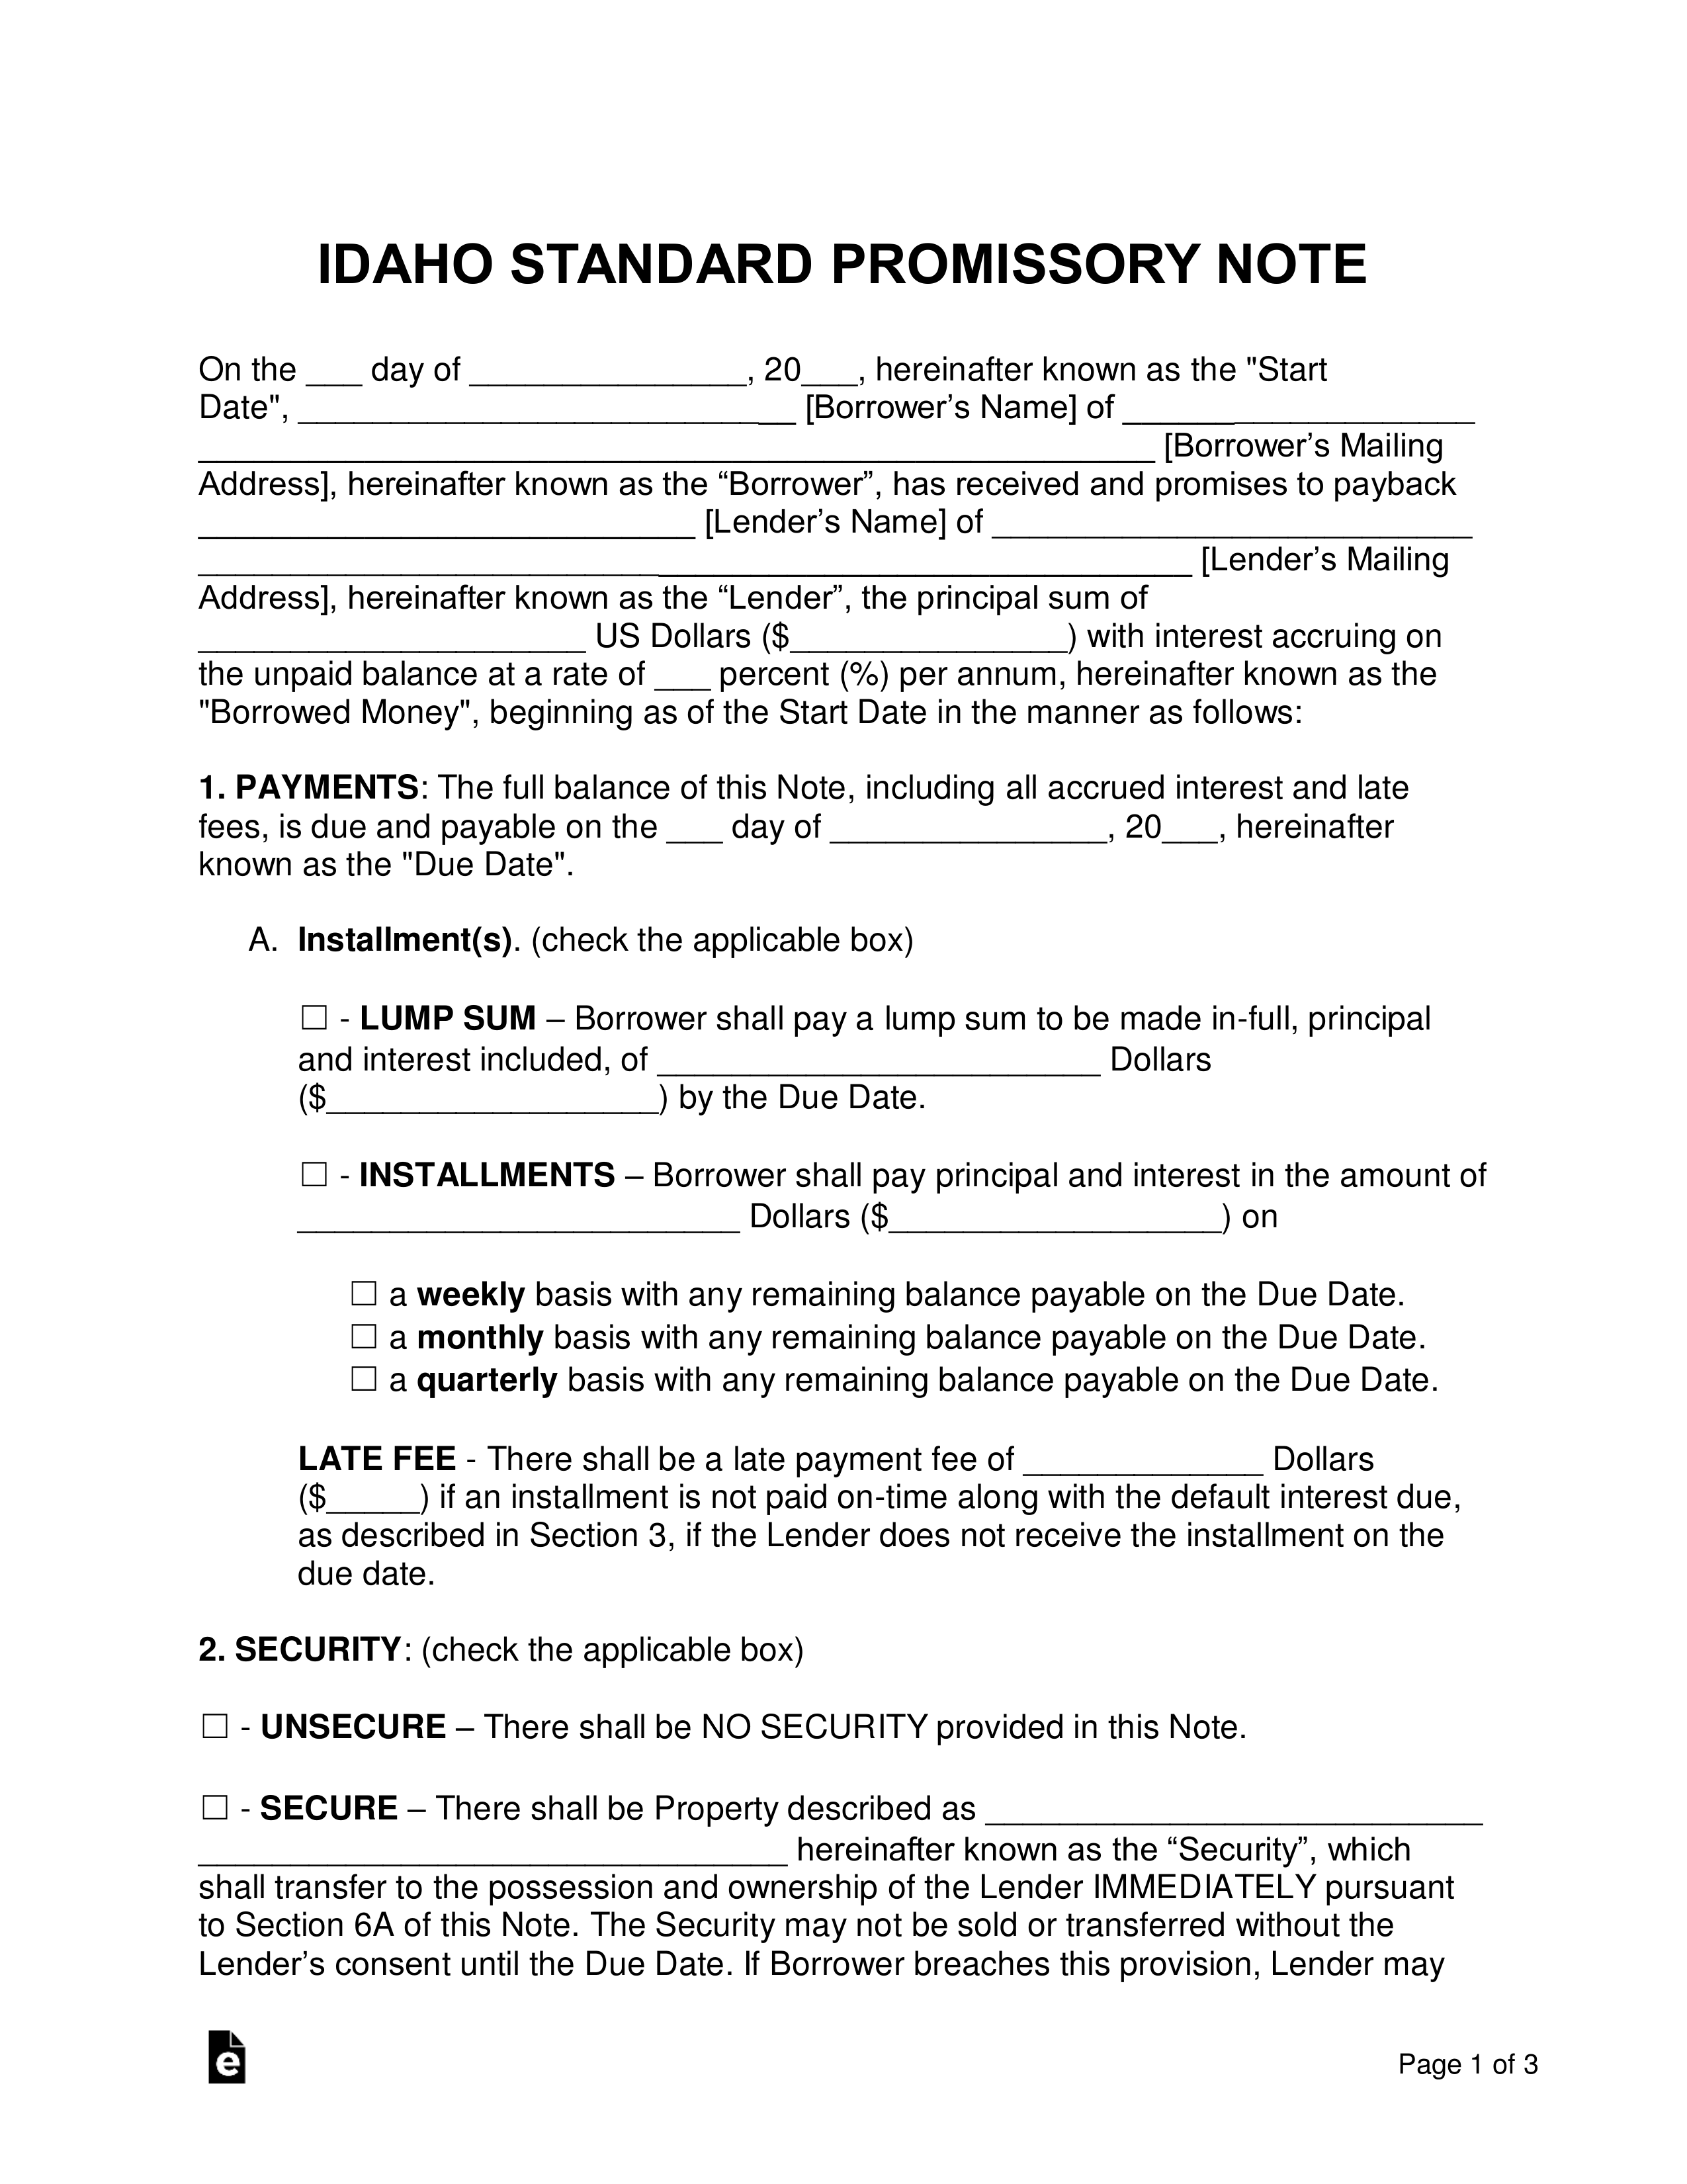 Idaho Promissory Note Templates (2)